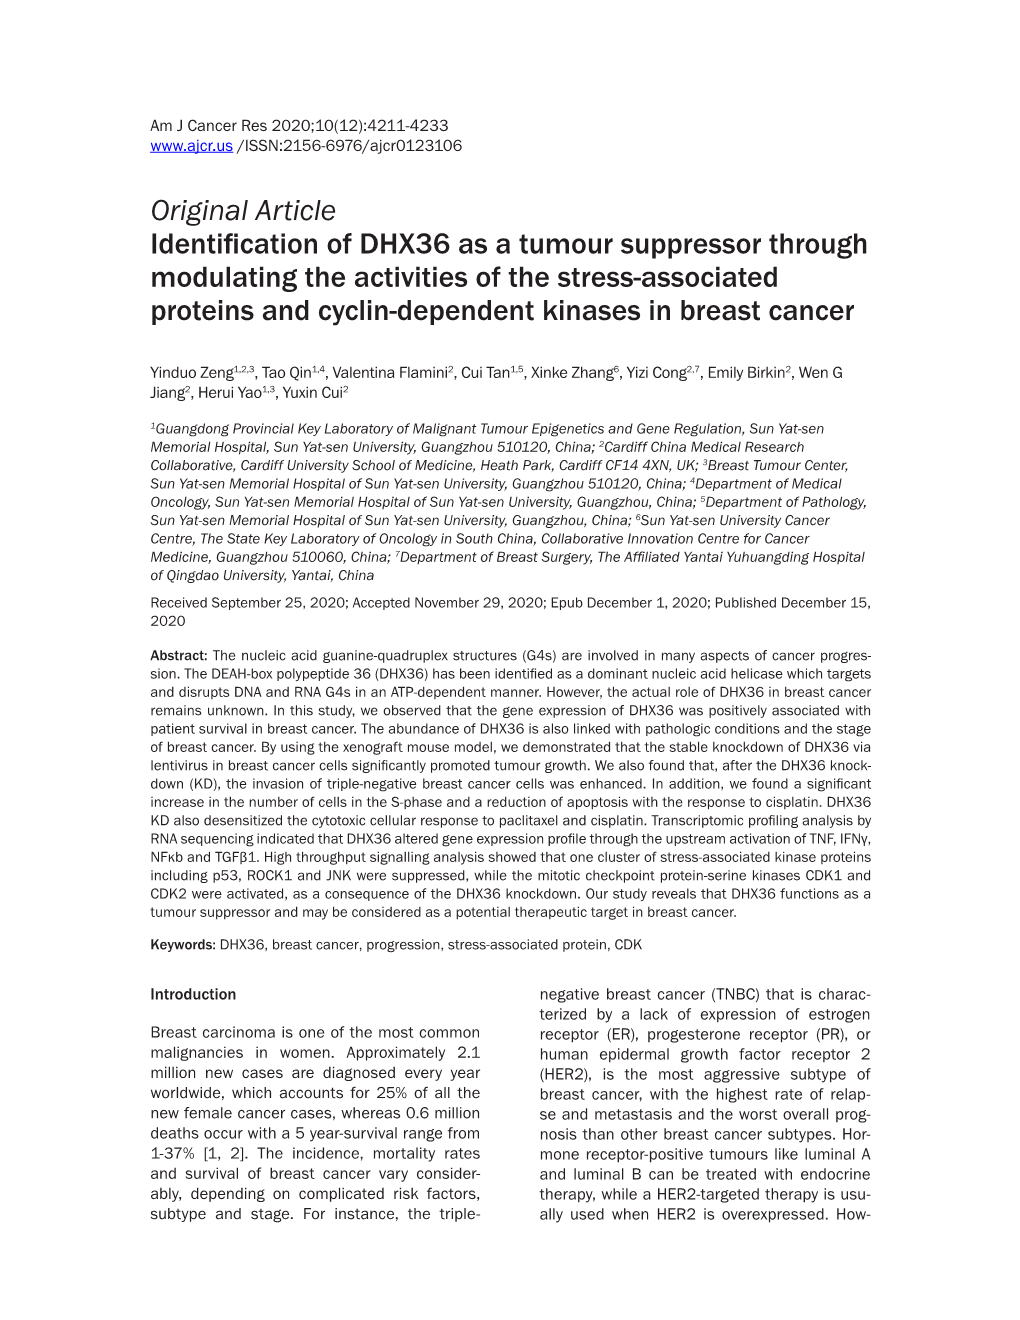 Original Article Identification of DHX36 As a Tumour Suppressor Through